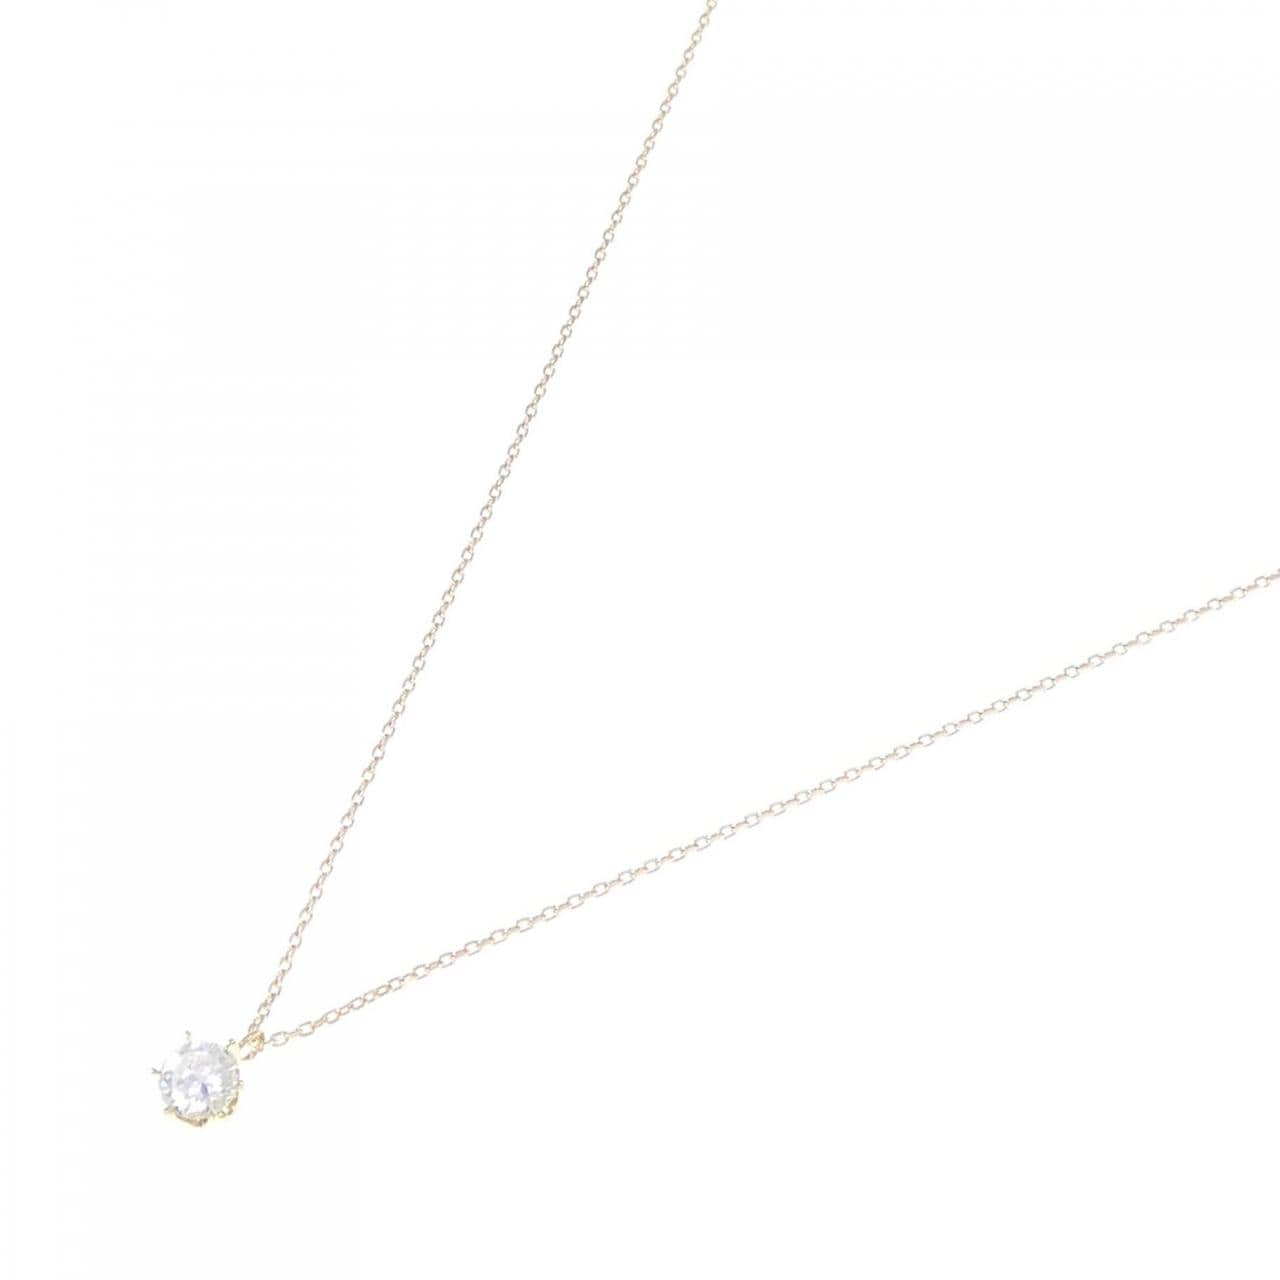 [BRAND NEW] K18YG Diamond Necklace 0.276CT G SI2 Good